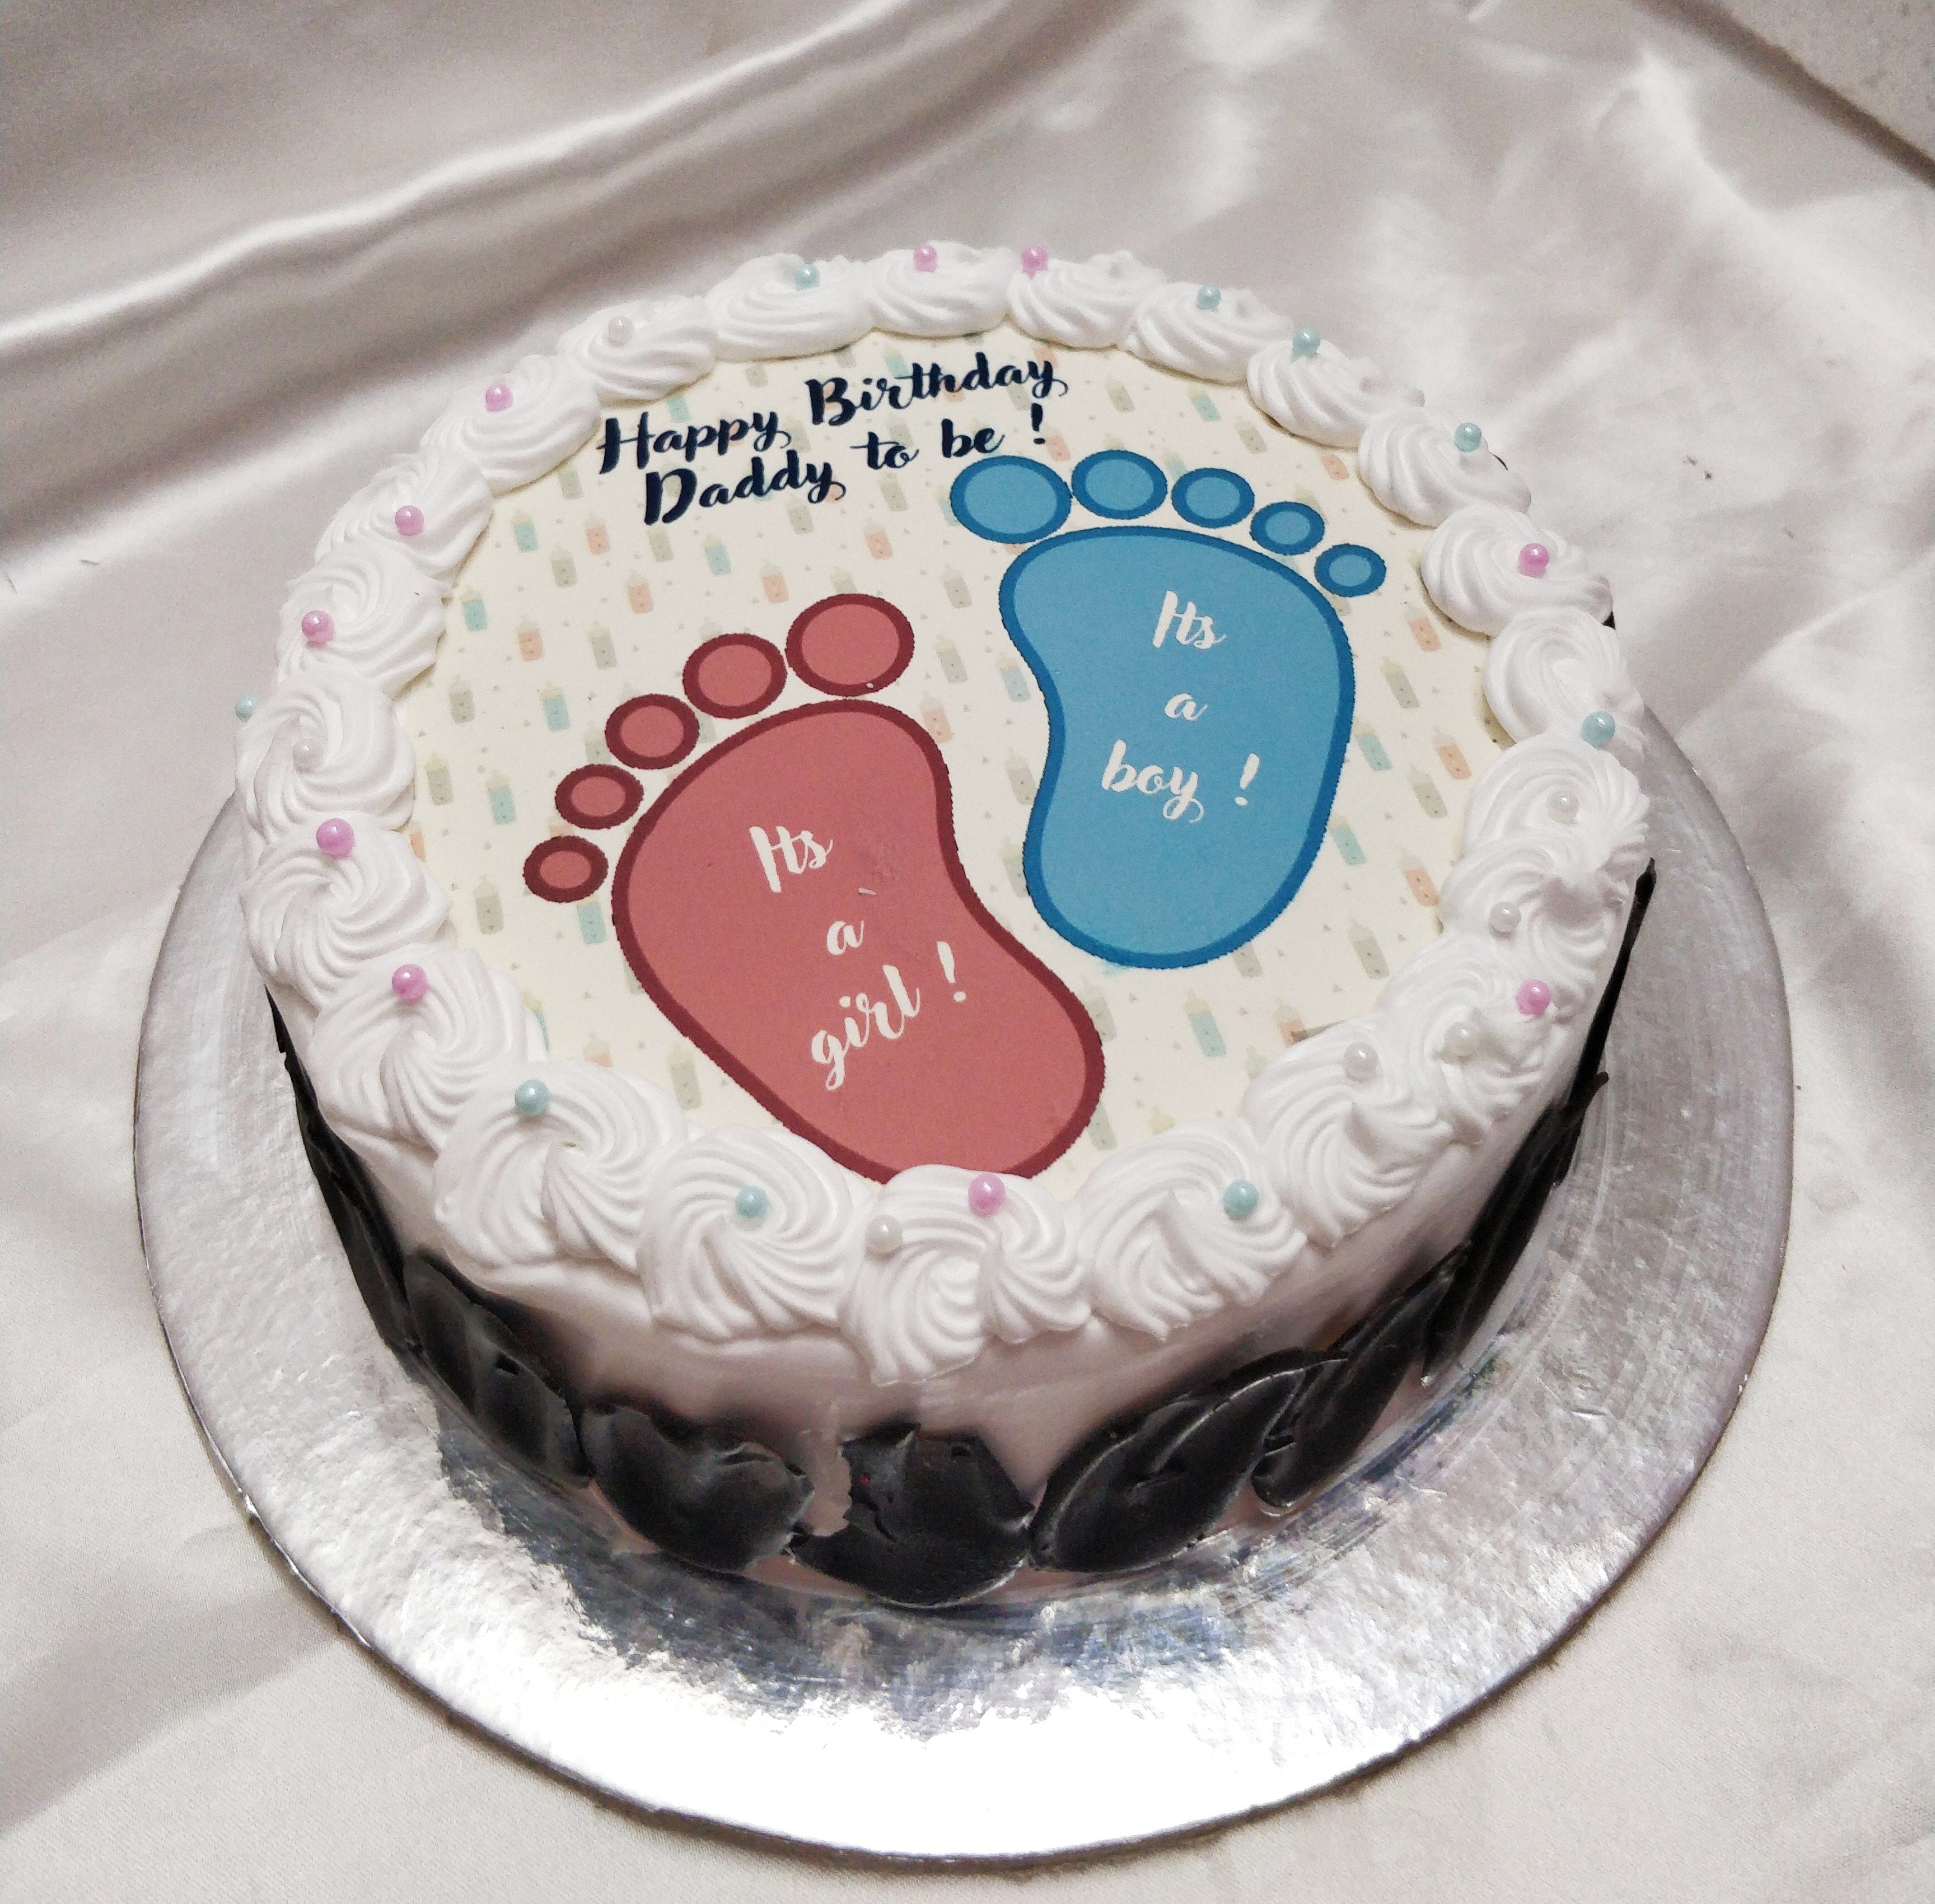 Send Anniversary Cakes Online in Kolkata - Design My Cake